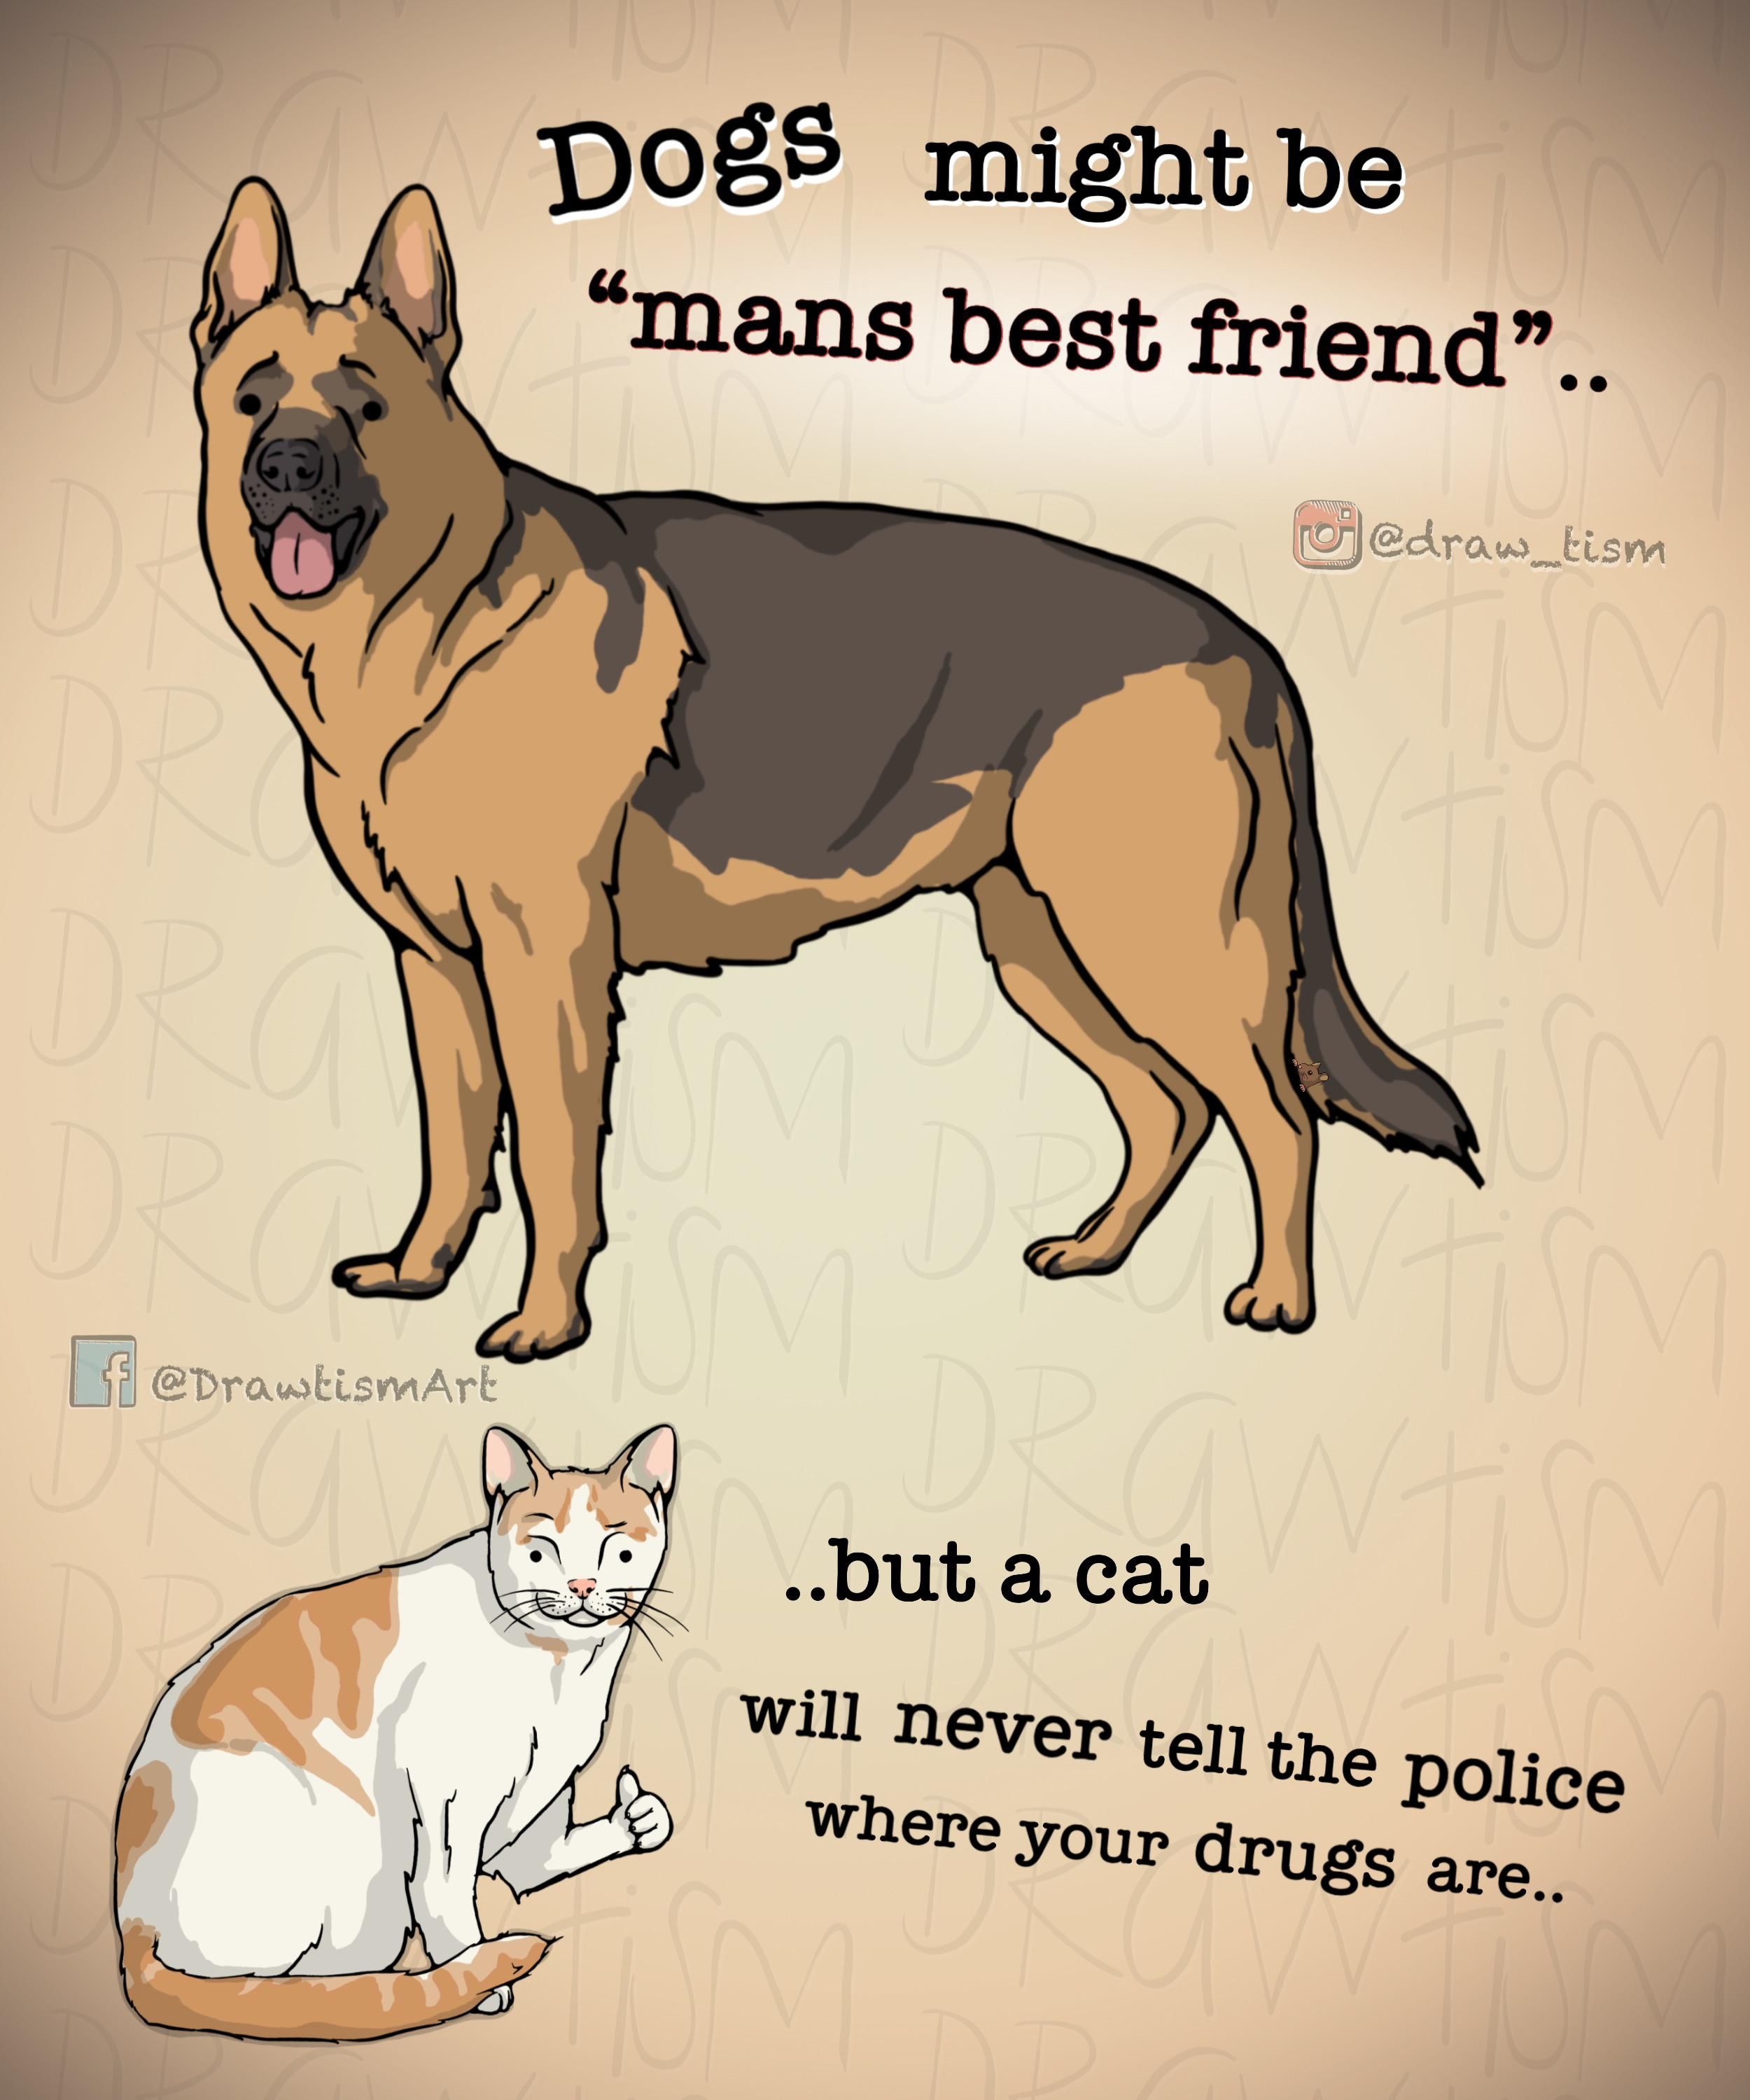 Loyalty in pets